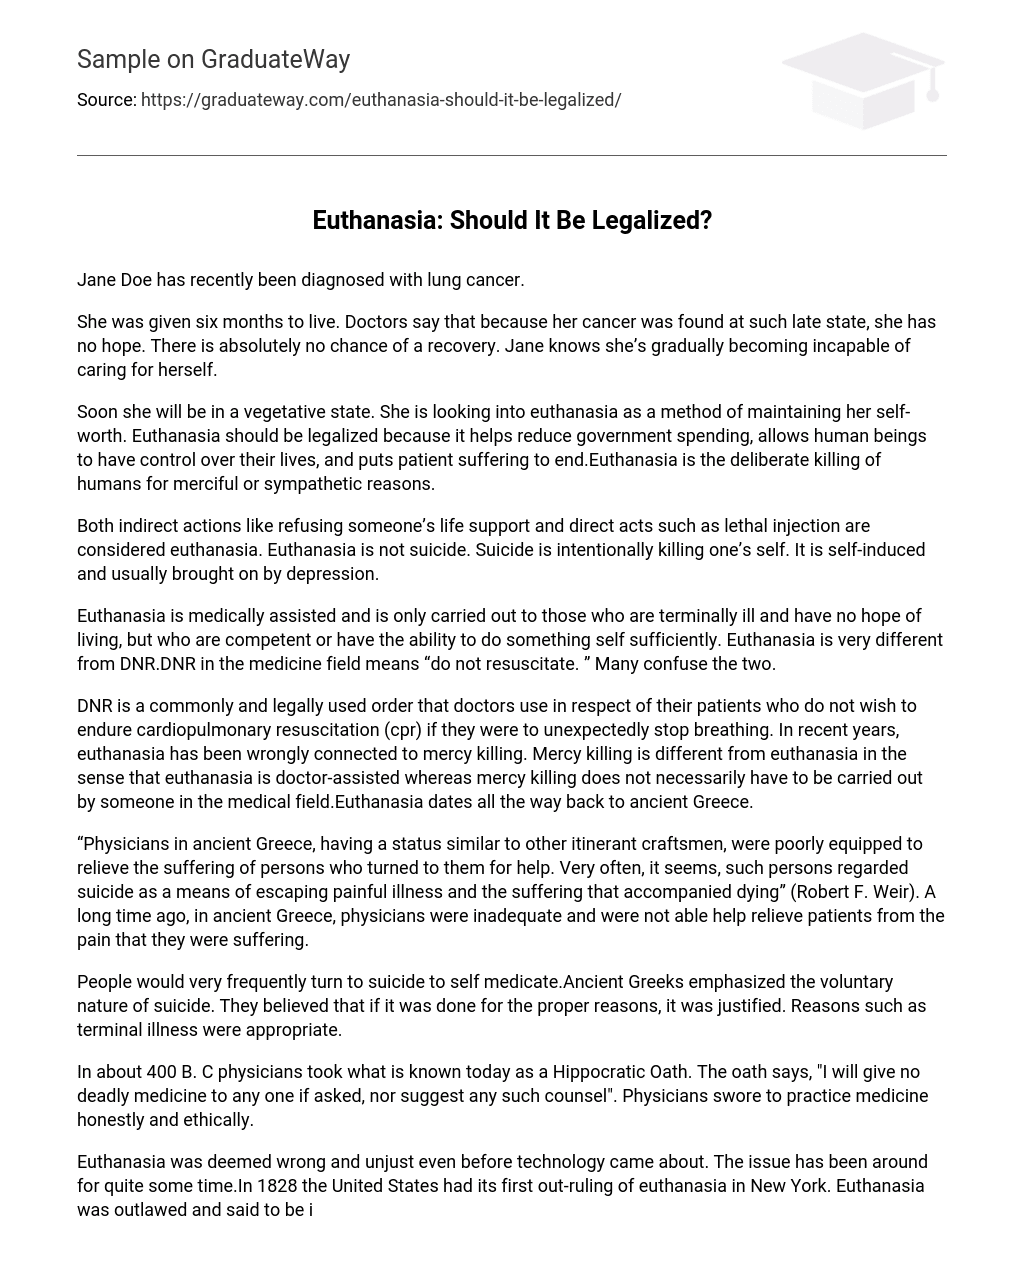 euthanasia should be legalized essay